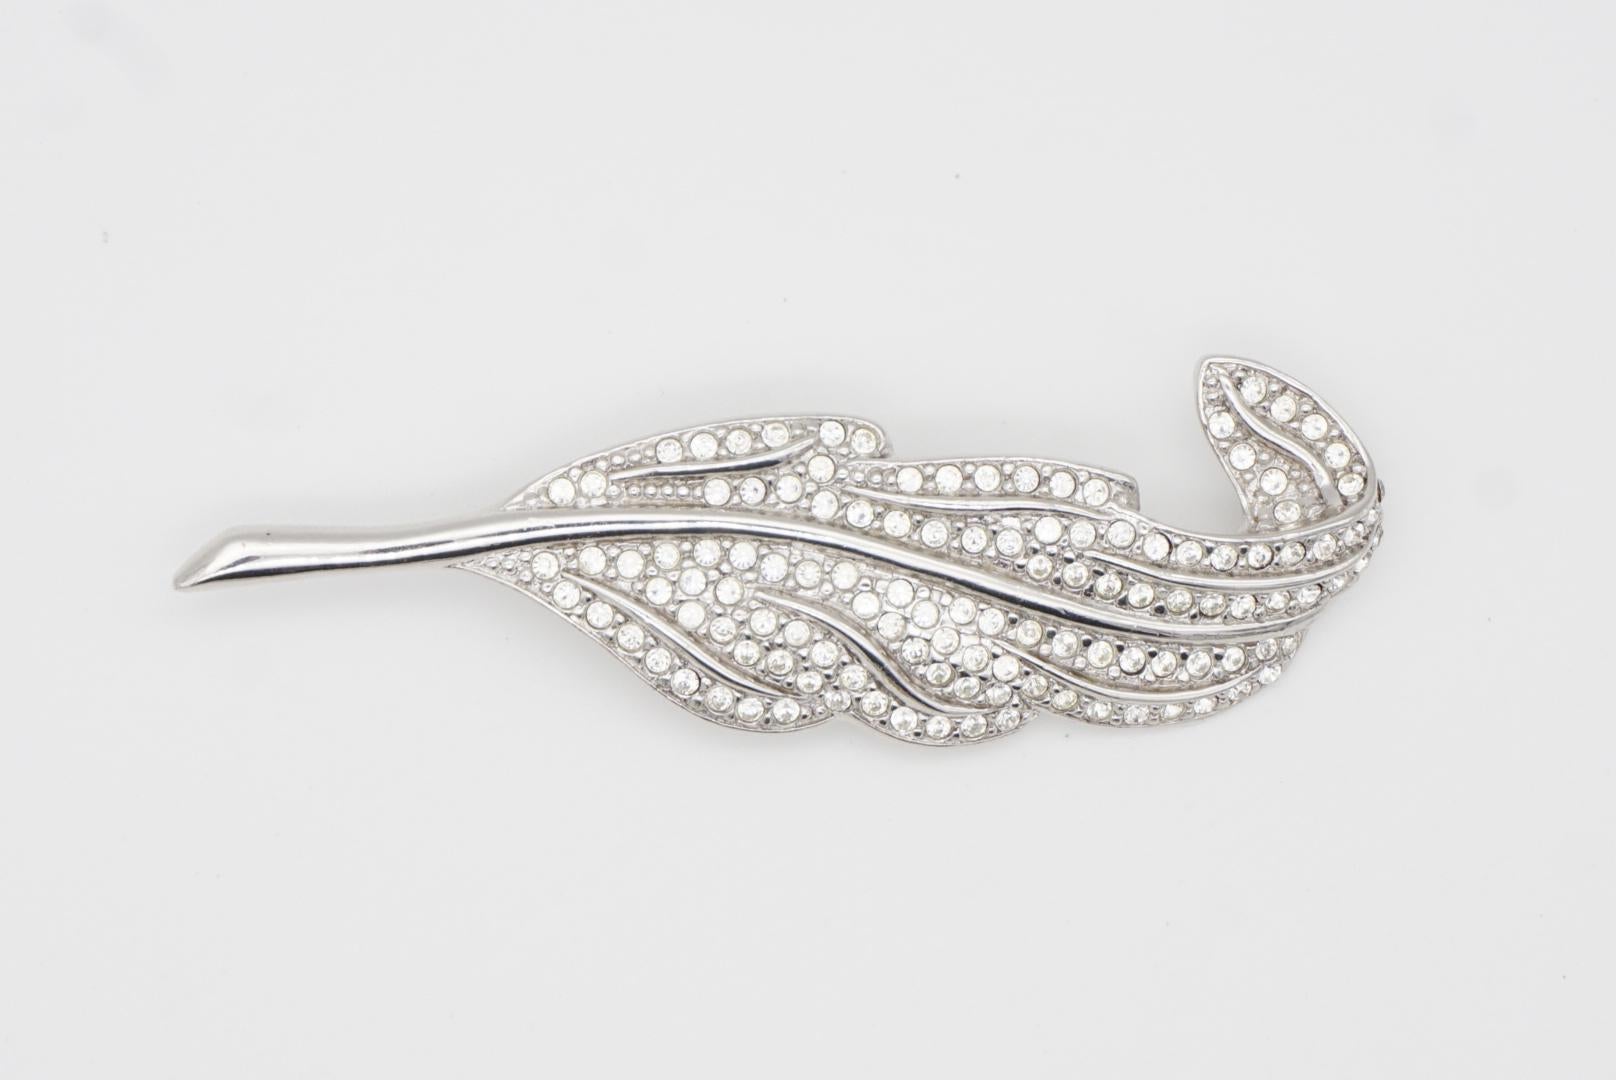 Christian Dior 1980s Vintage Vivid Wavy Crystal Long Feather Leaf Silver Brooch For Sale 3